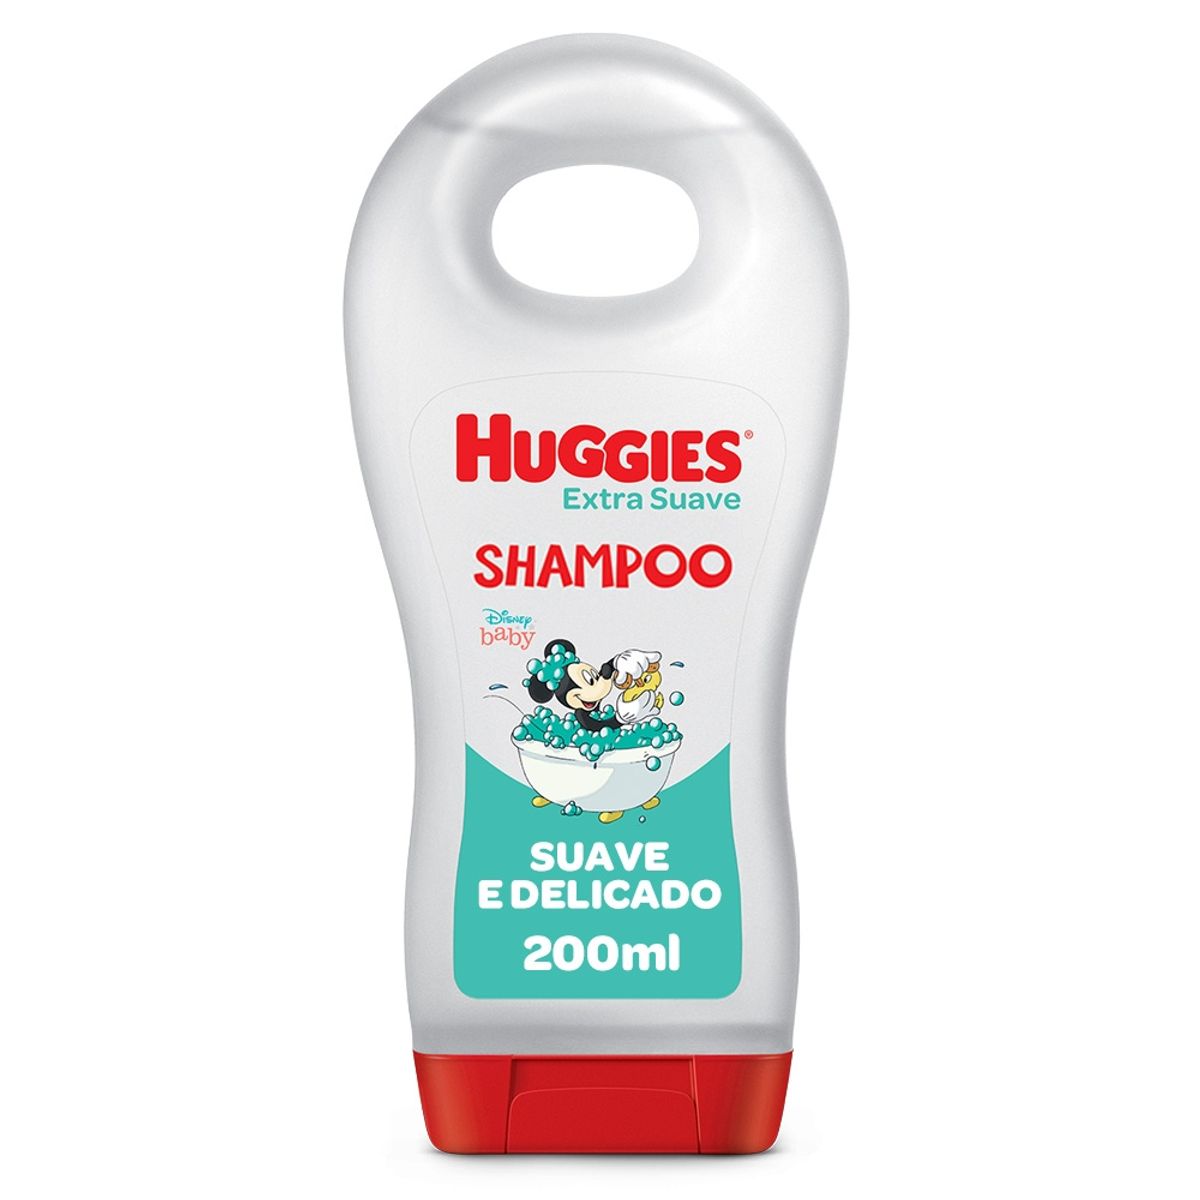 Shampoo Huggies Extra Suave - 200 ml image number 0